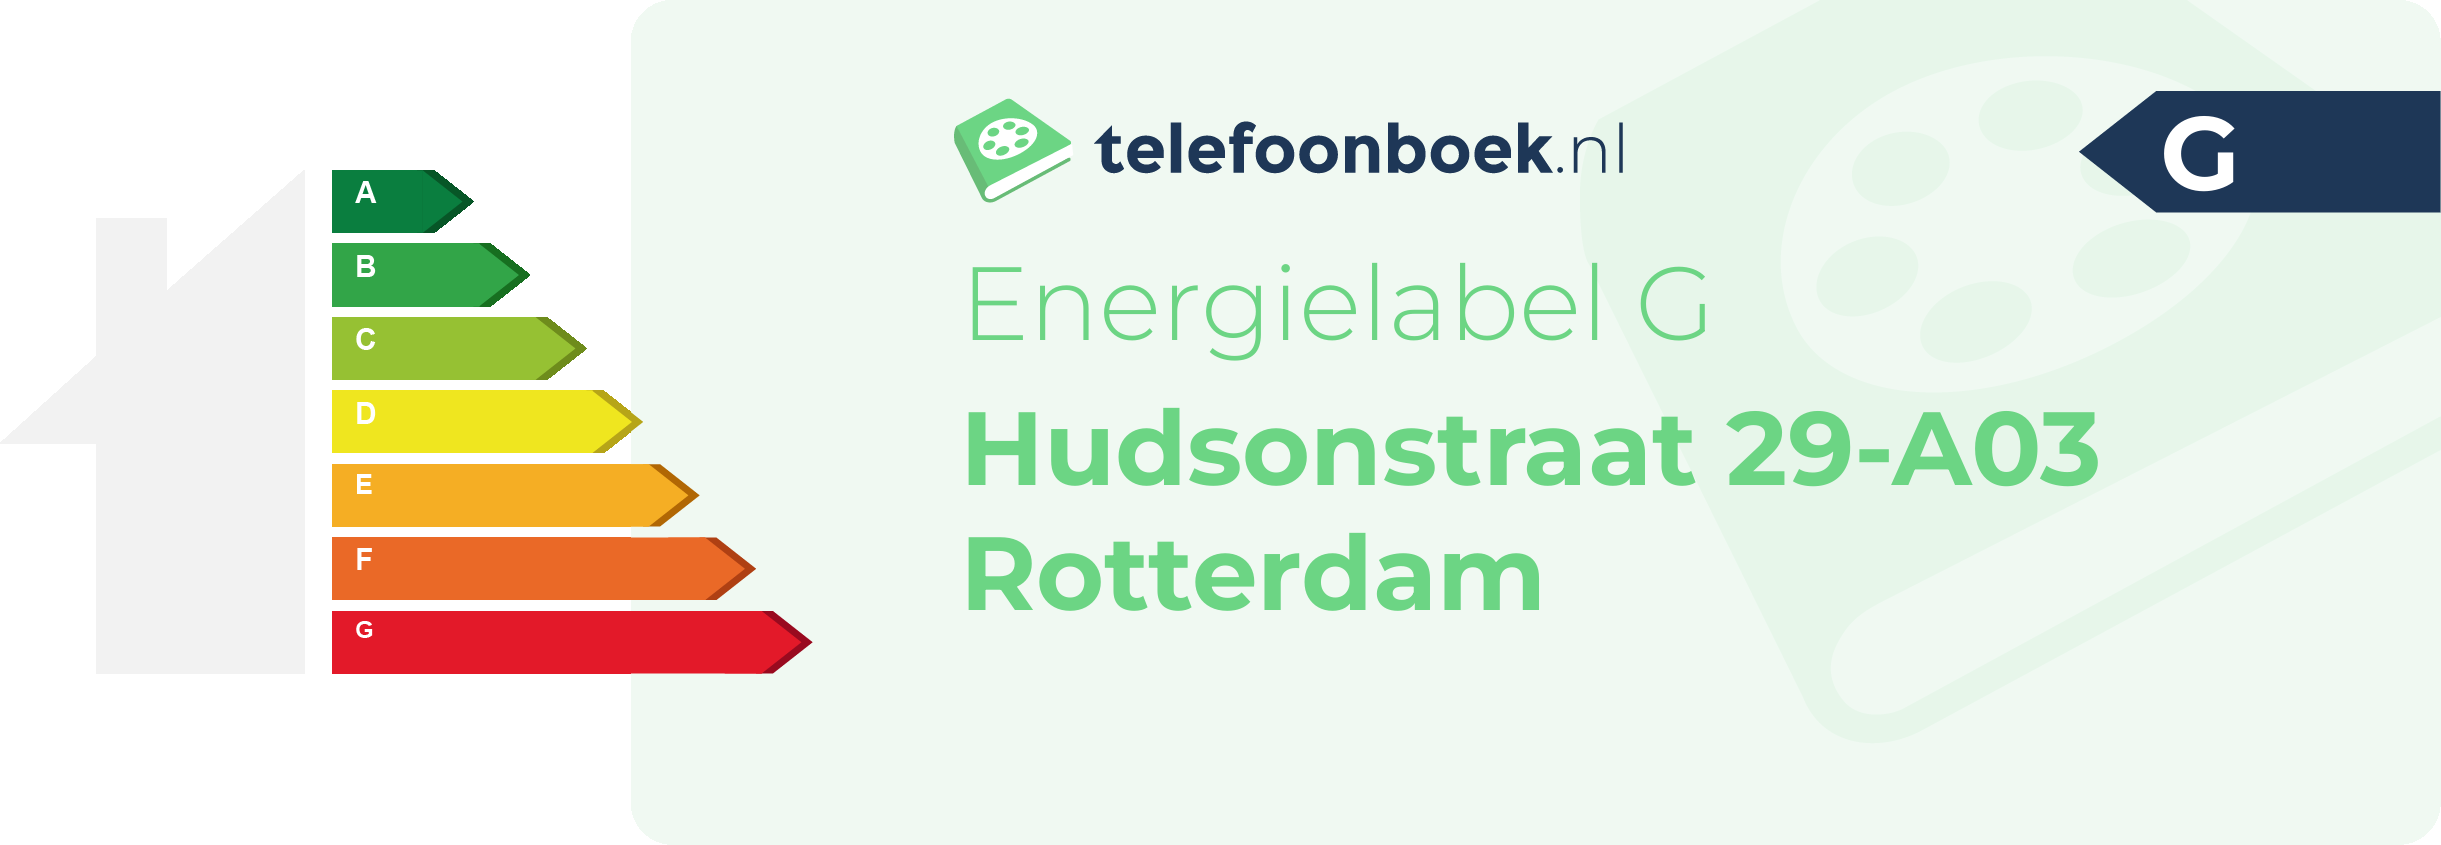 Energielabel Hudsonstraat 29-A03 Rotterdam